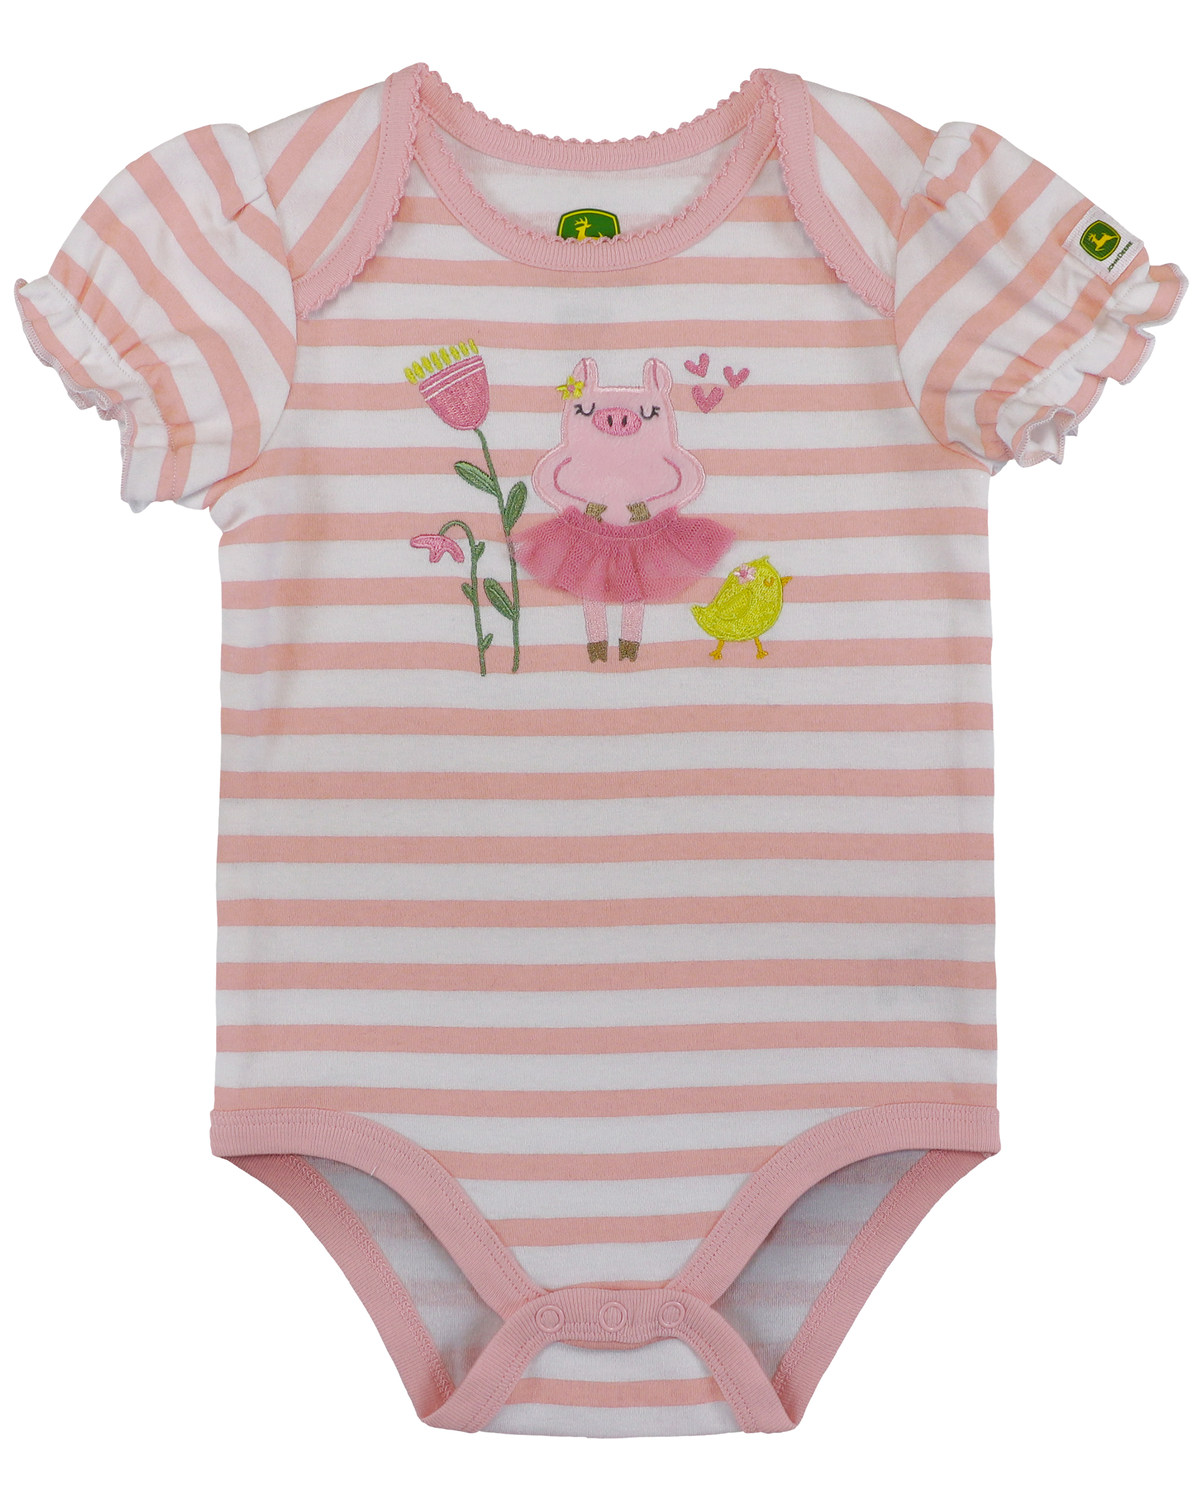 John Deere Infant Girls' Pig Graphic Print Striped Short Sleeve Onesie